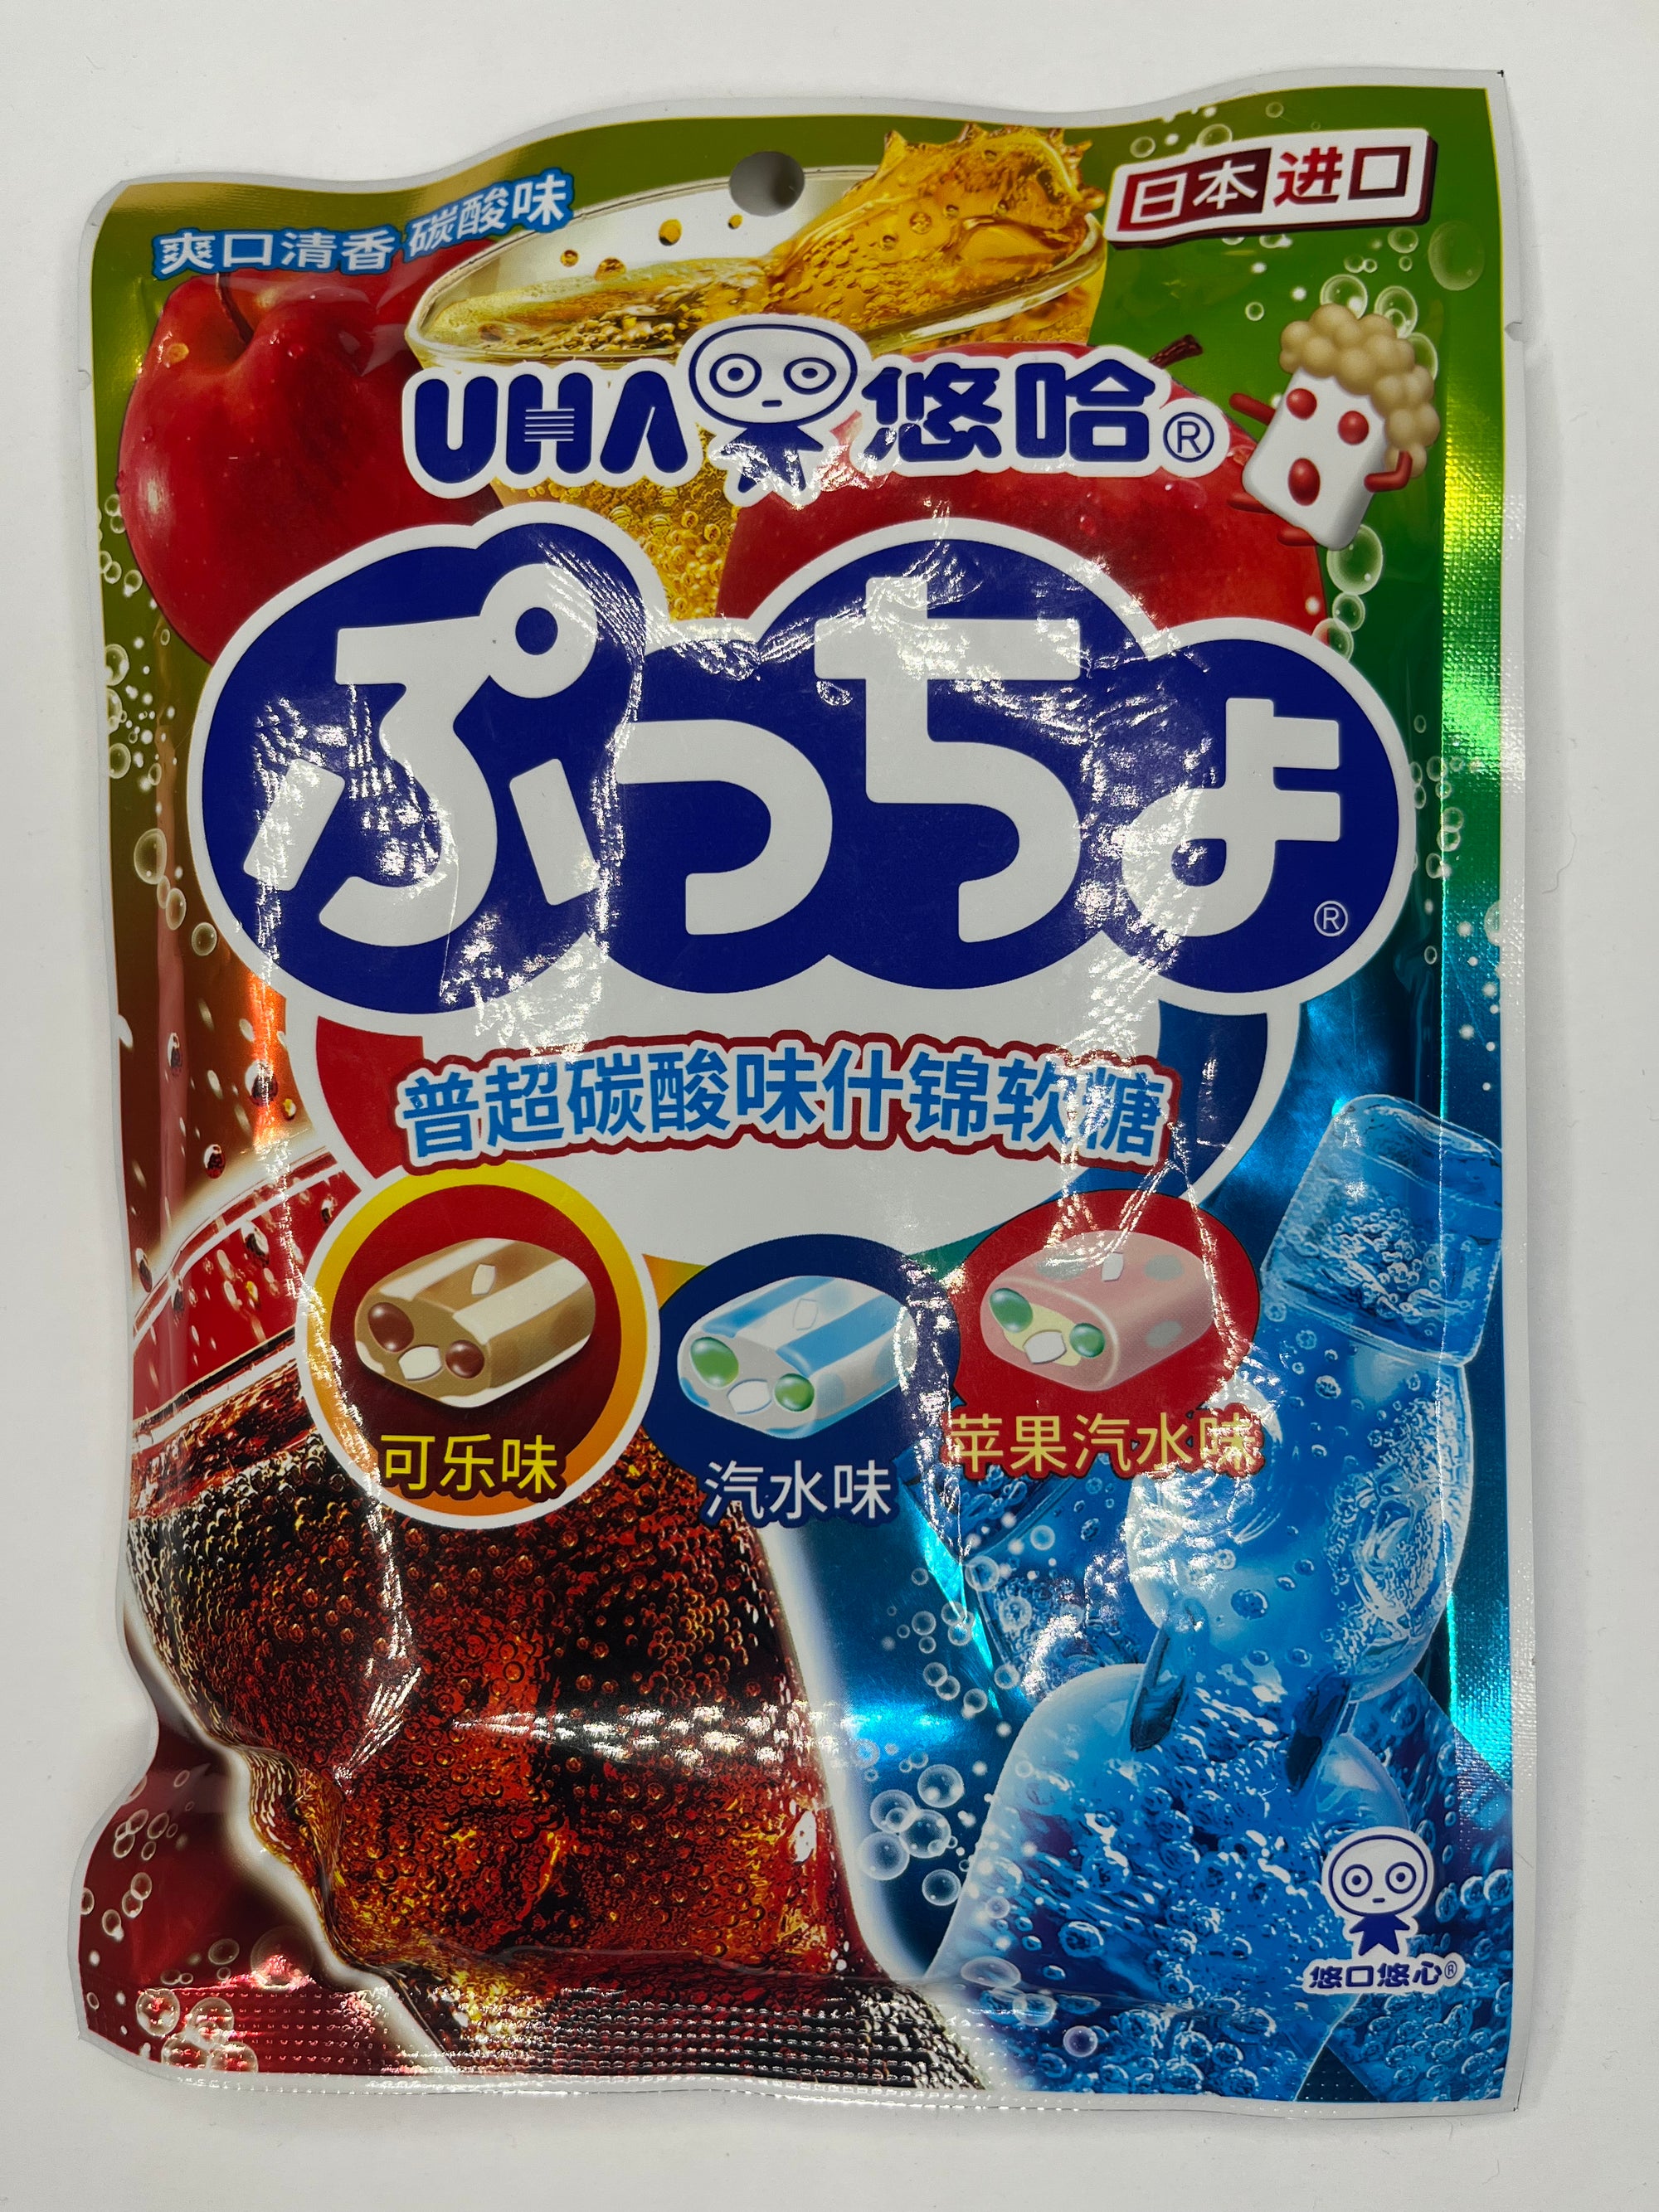 Uha Pucho Soda Gummies (Japan)